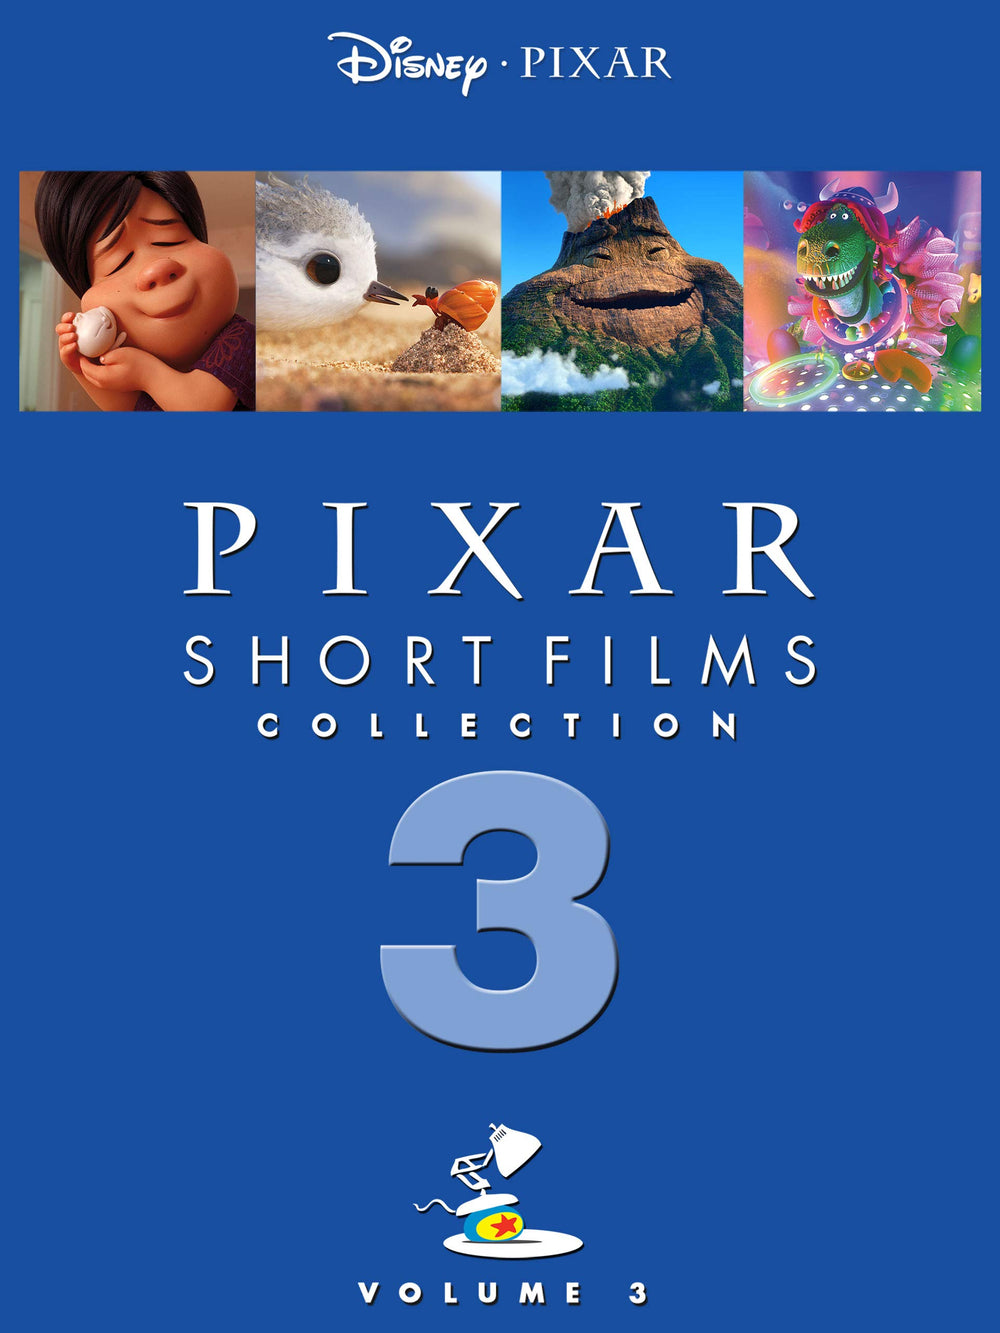 Pixar Short Films Collection: Volume 3 HD VUDU/iTunes Via Moviesanywhere